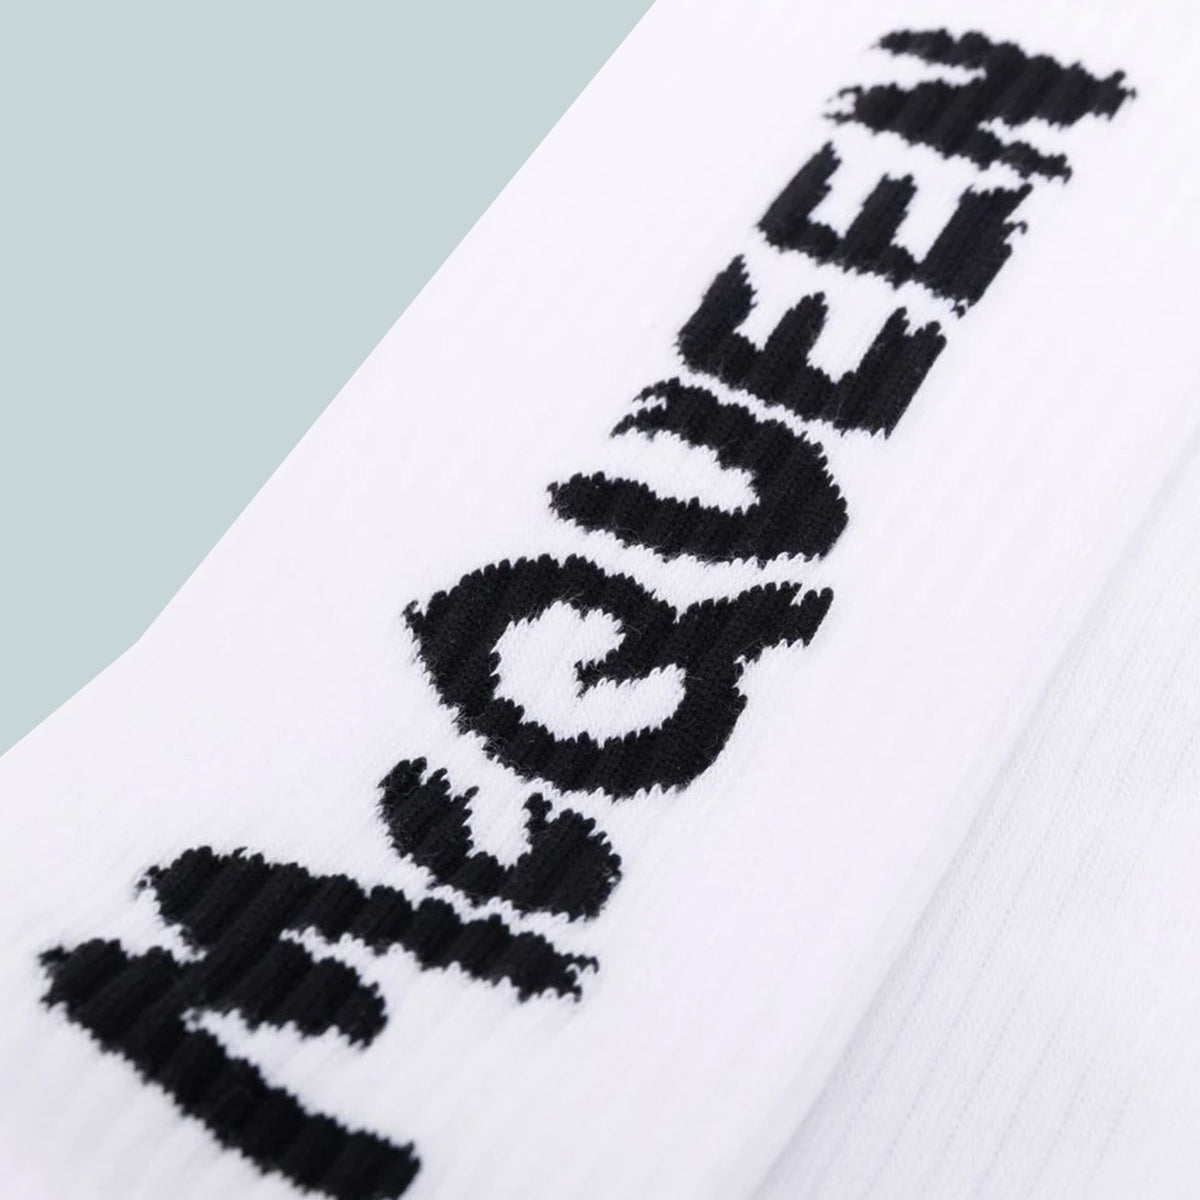 McQueen graffiti socks white